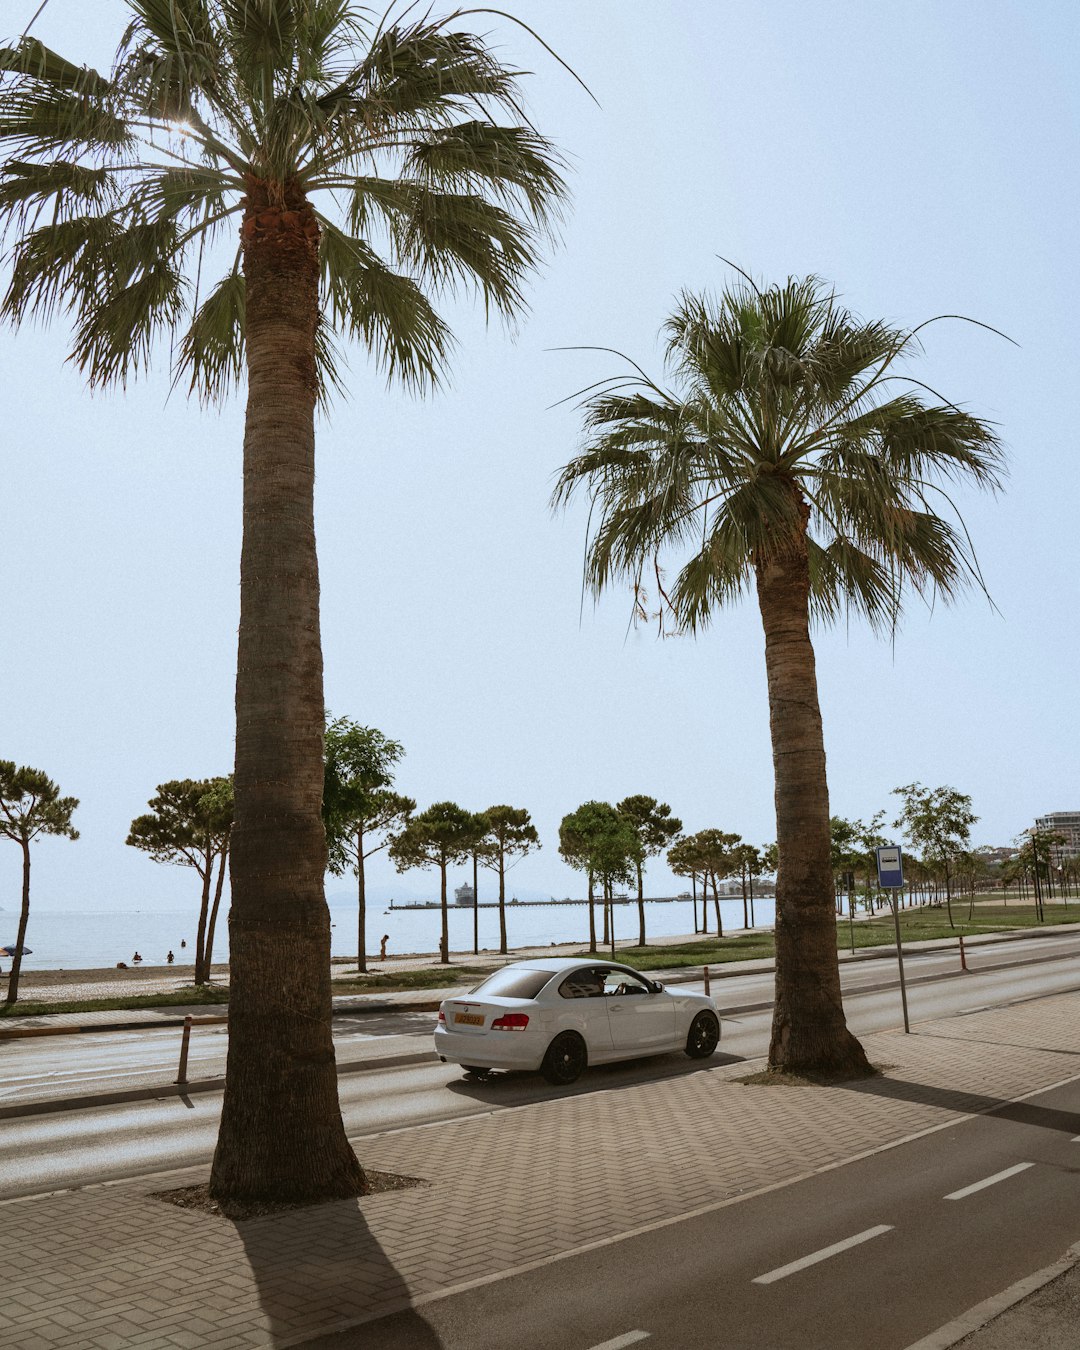 white sedan on road near palm trees during daytime